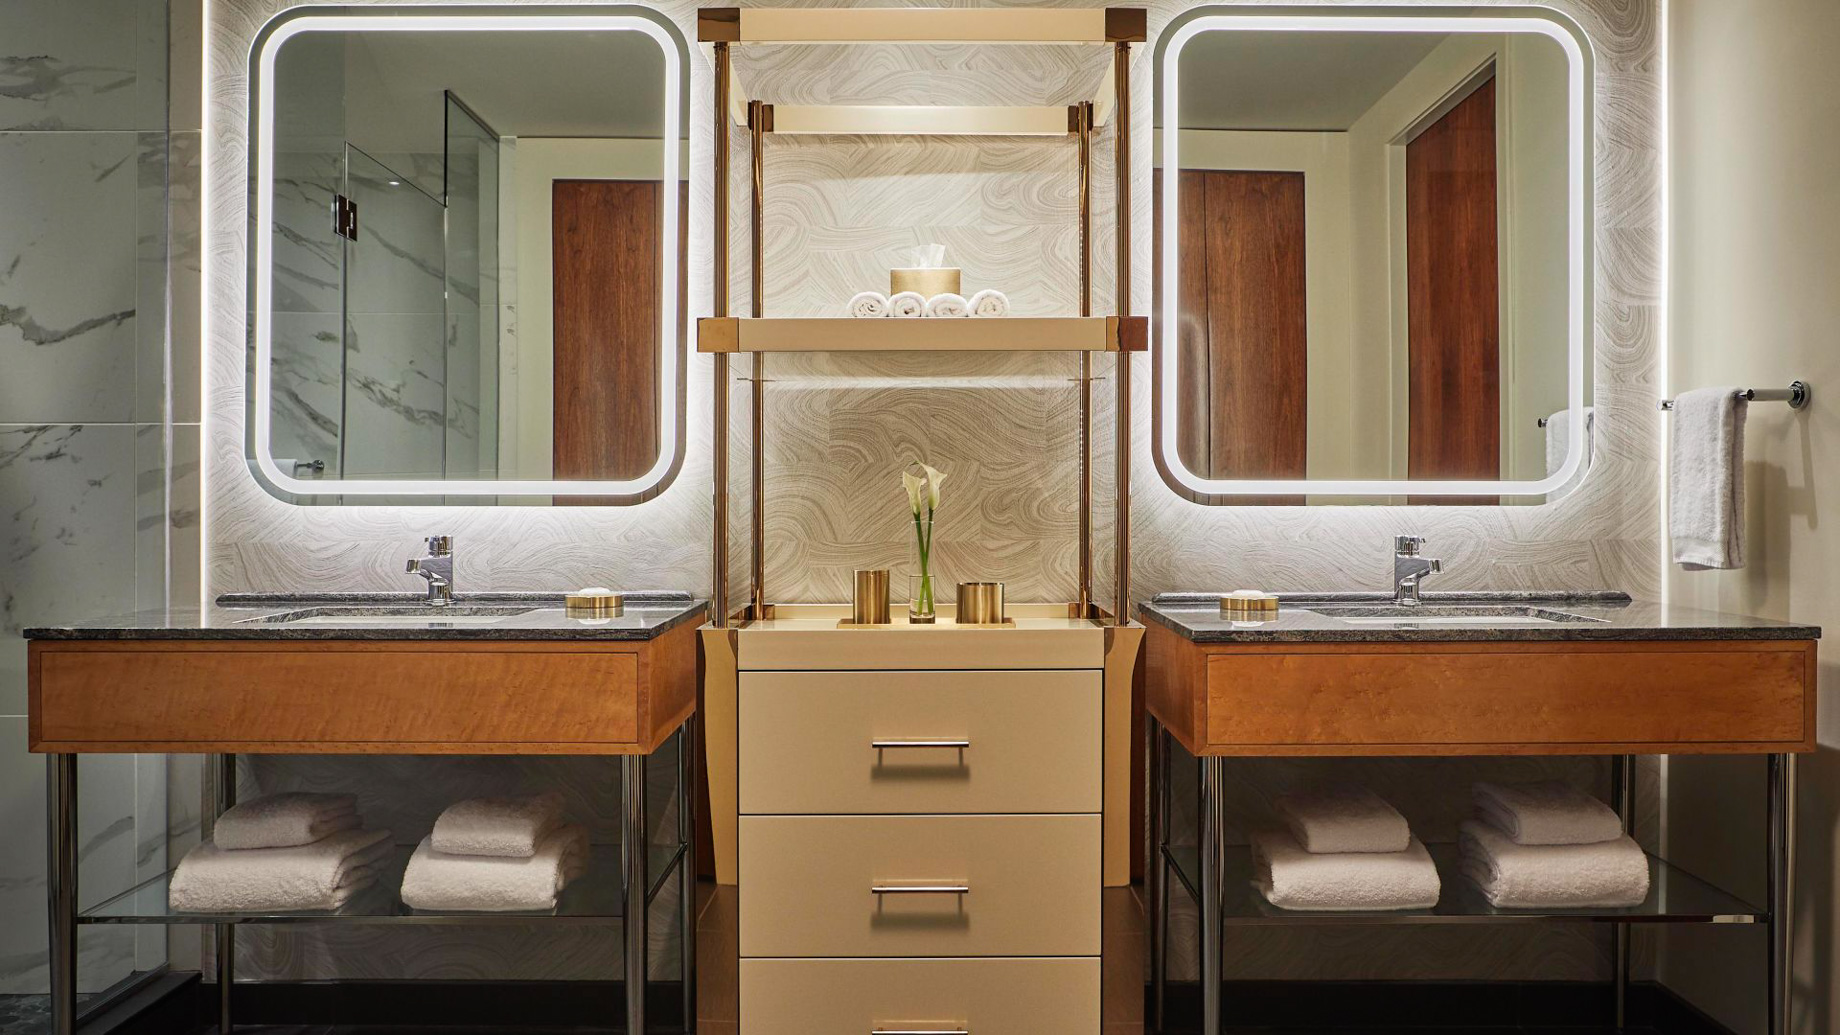 Viceroy Chicago Hotel - Chicago, IL, USA - Junior Suite Bathroom Vanity